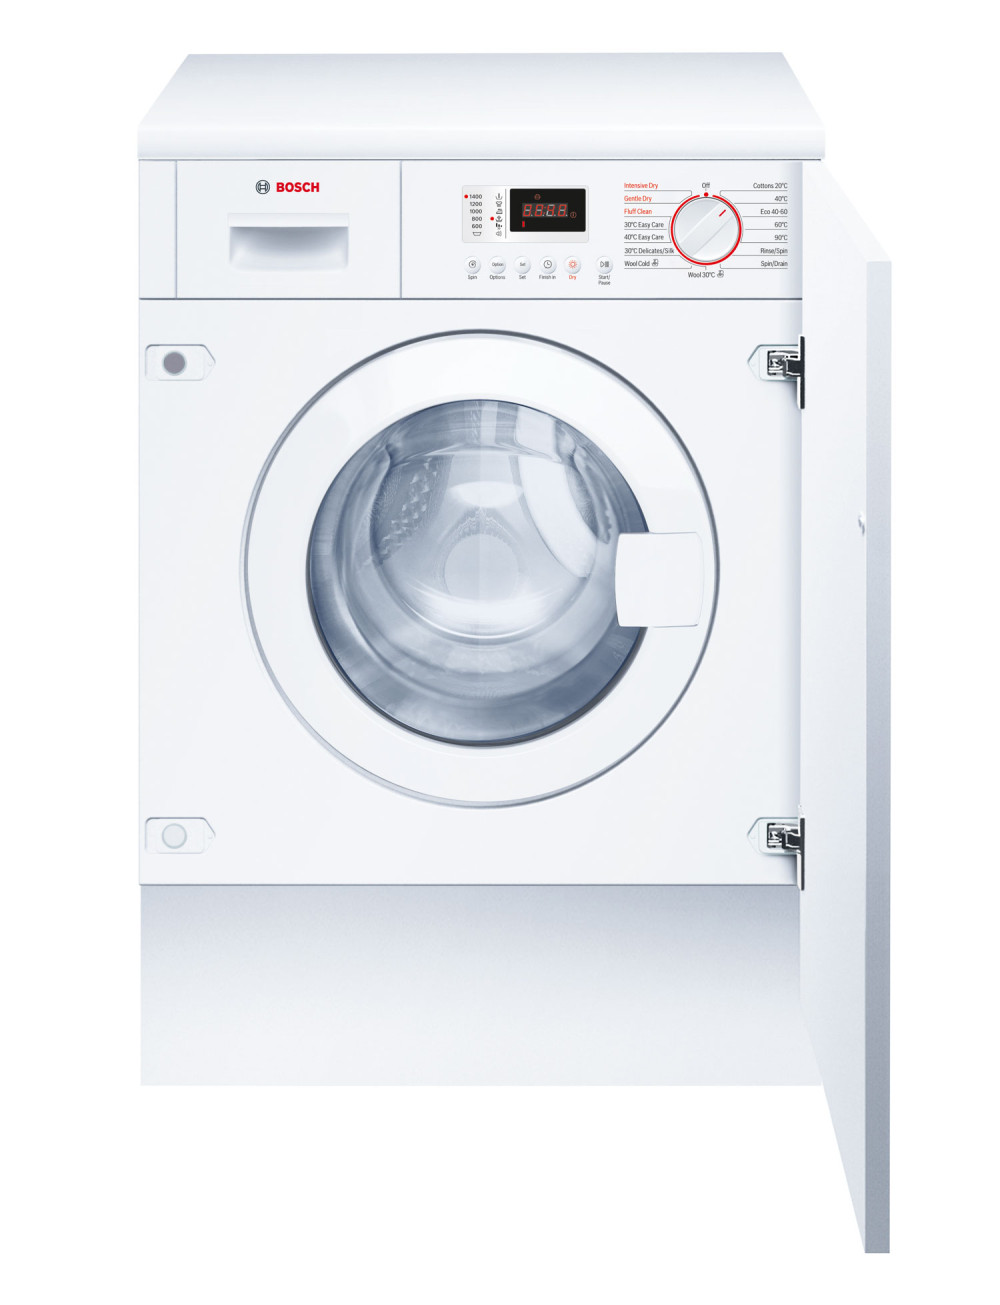 Bosch WKD28352GB Series 4 7kg/4kg Integrated Washer Dryer featured image